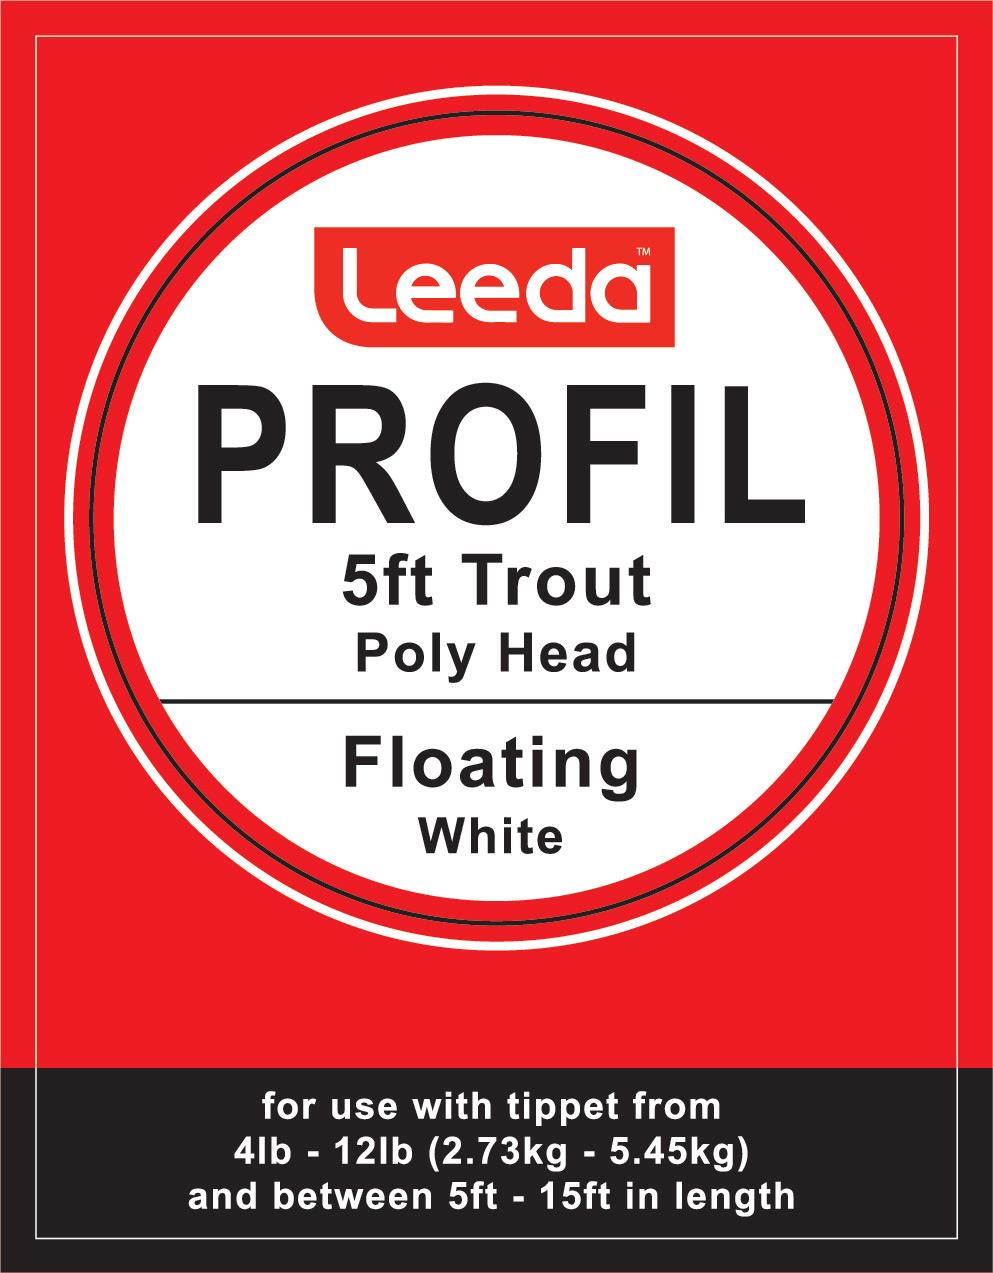 Leeda Polyhead Trout 5ft Floating 0IPS